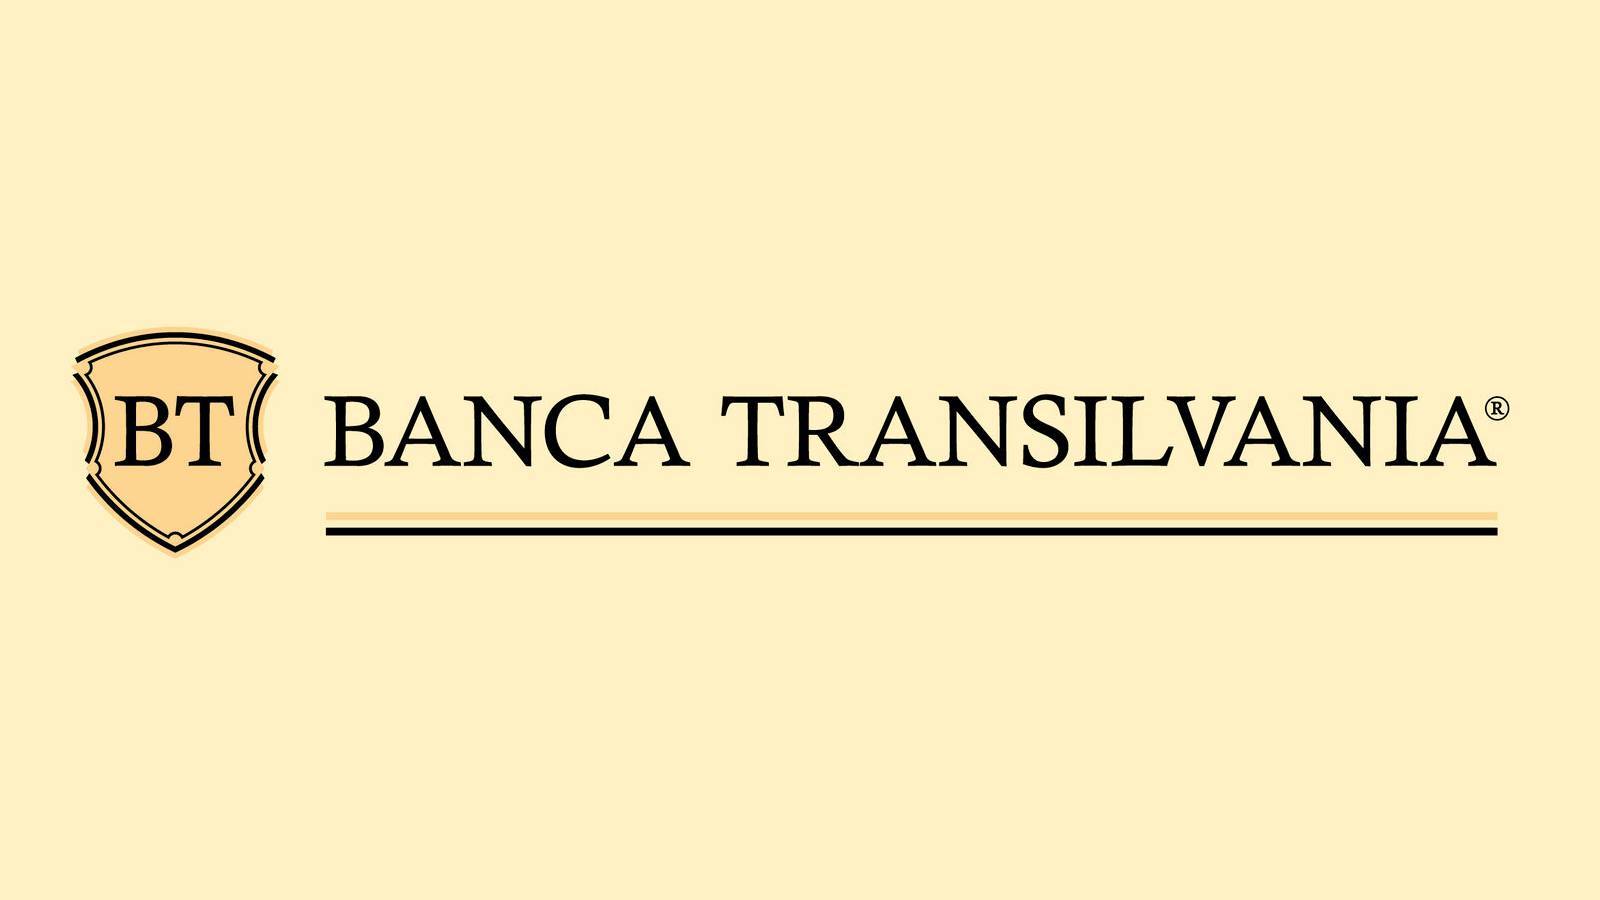 BANCA Transilvania Mesures IMPORTANTES prises par les clients roumains